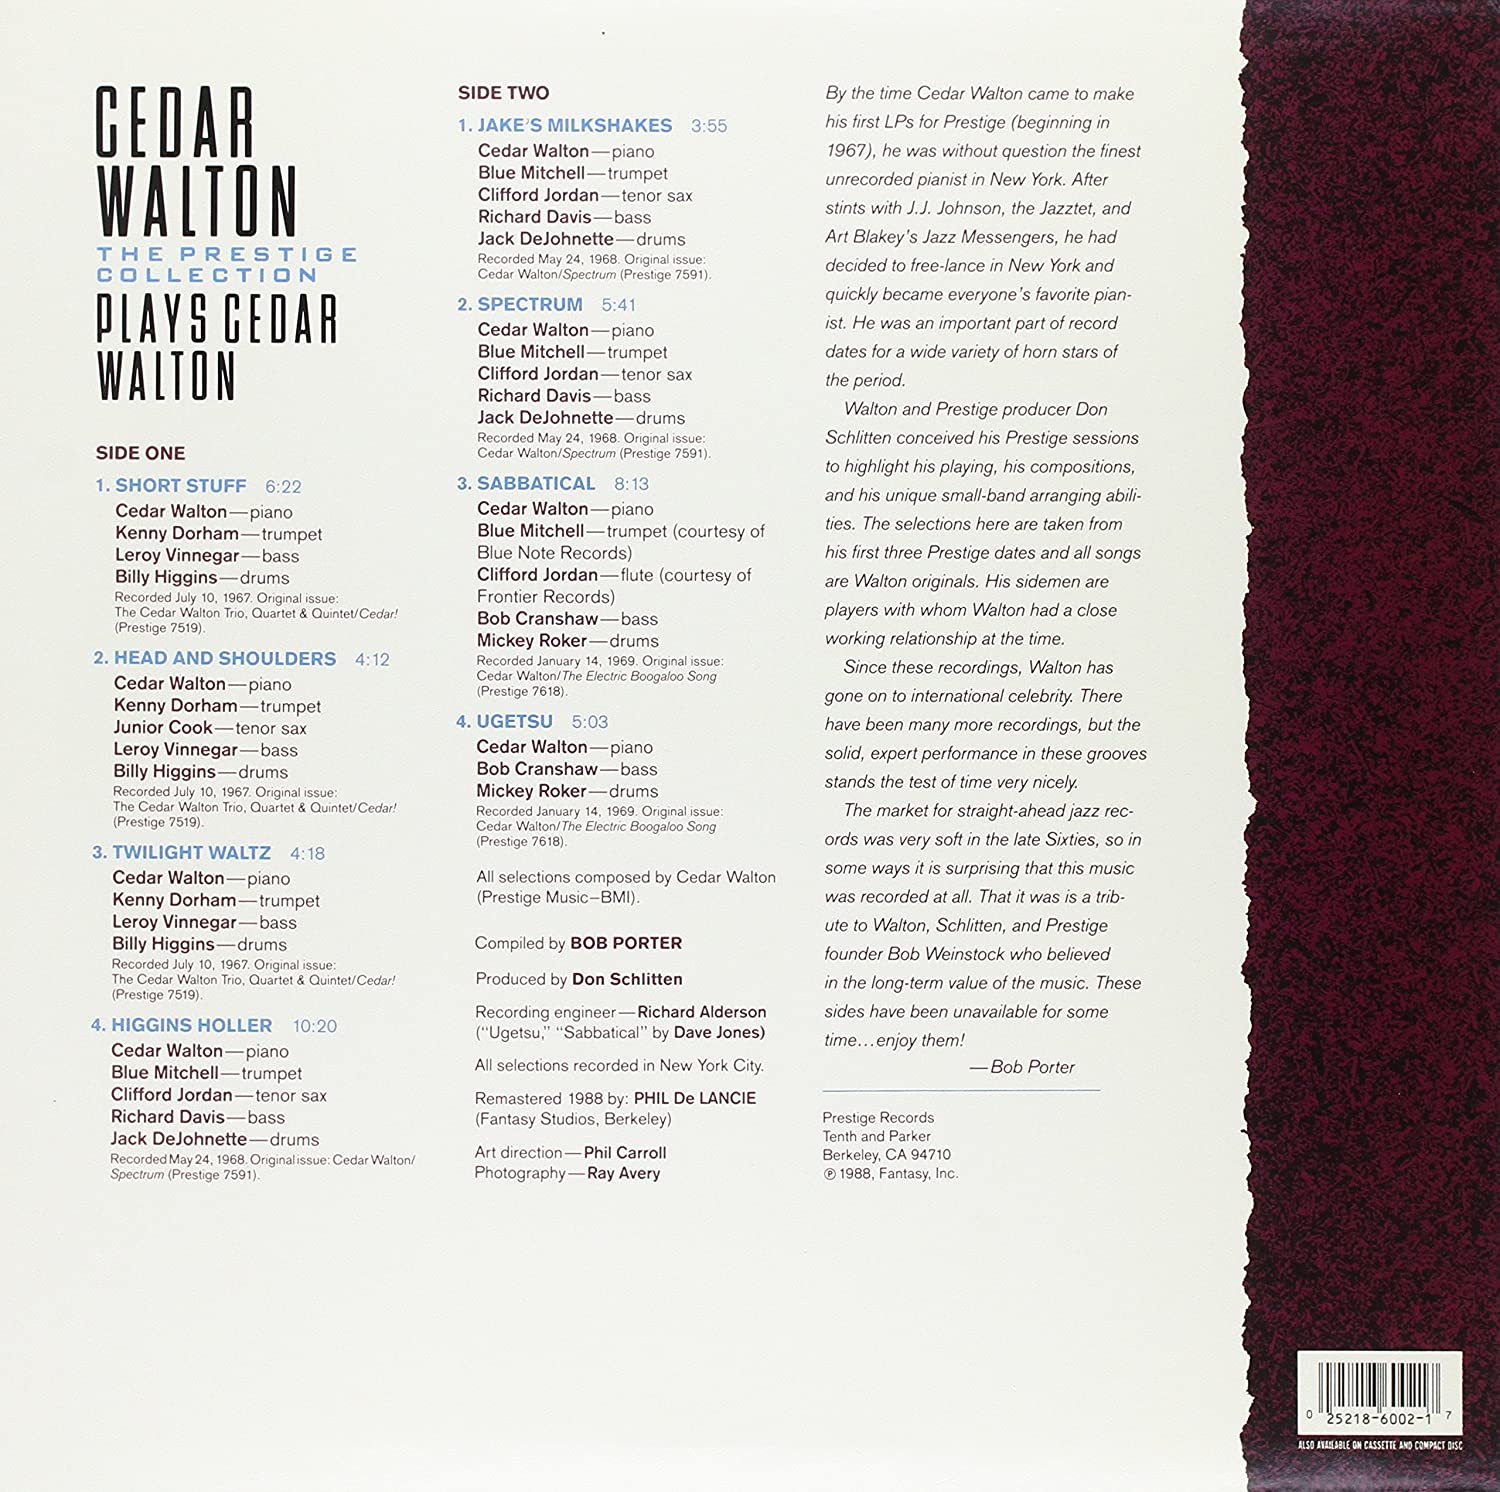 Cedar Walton (시더 월턴) - Plays Cedar Walton / The Prestige Collection [LP]